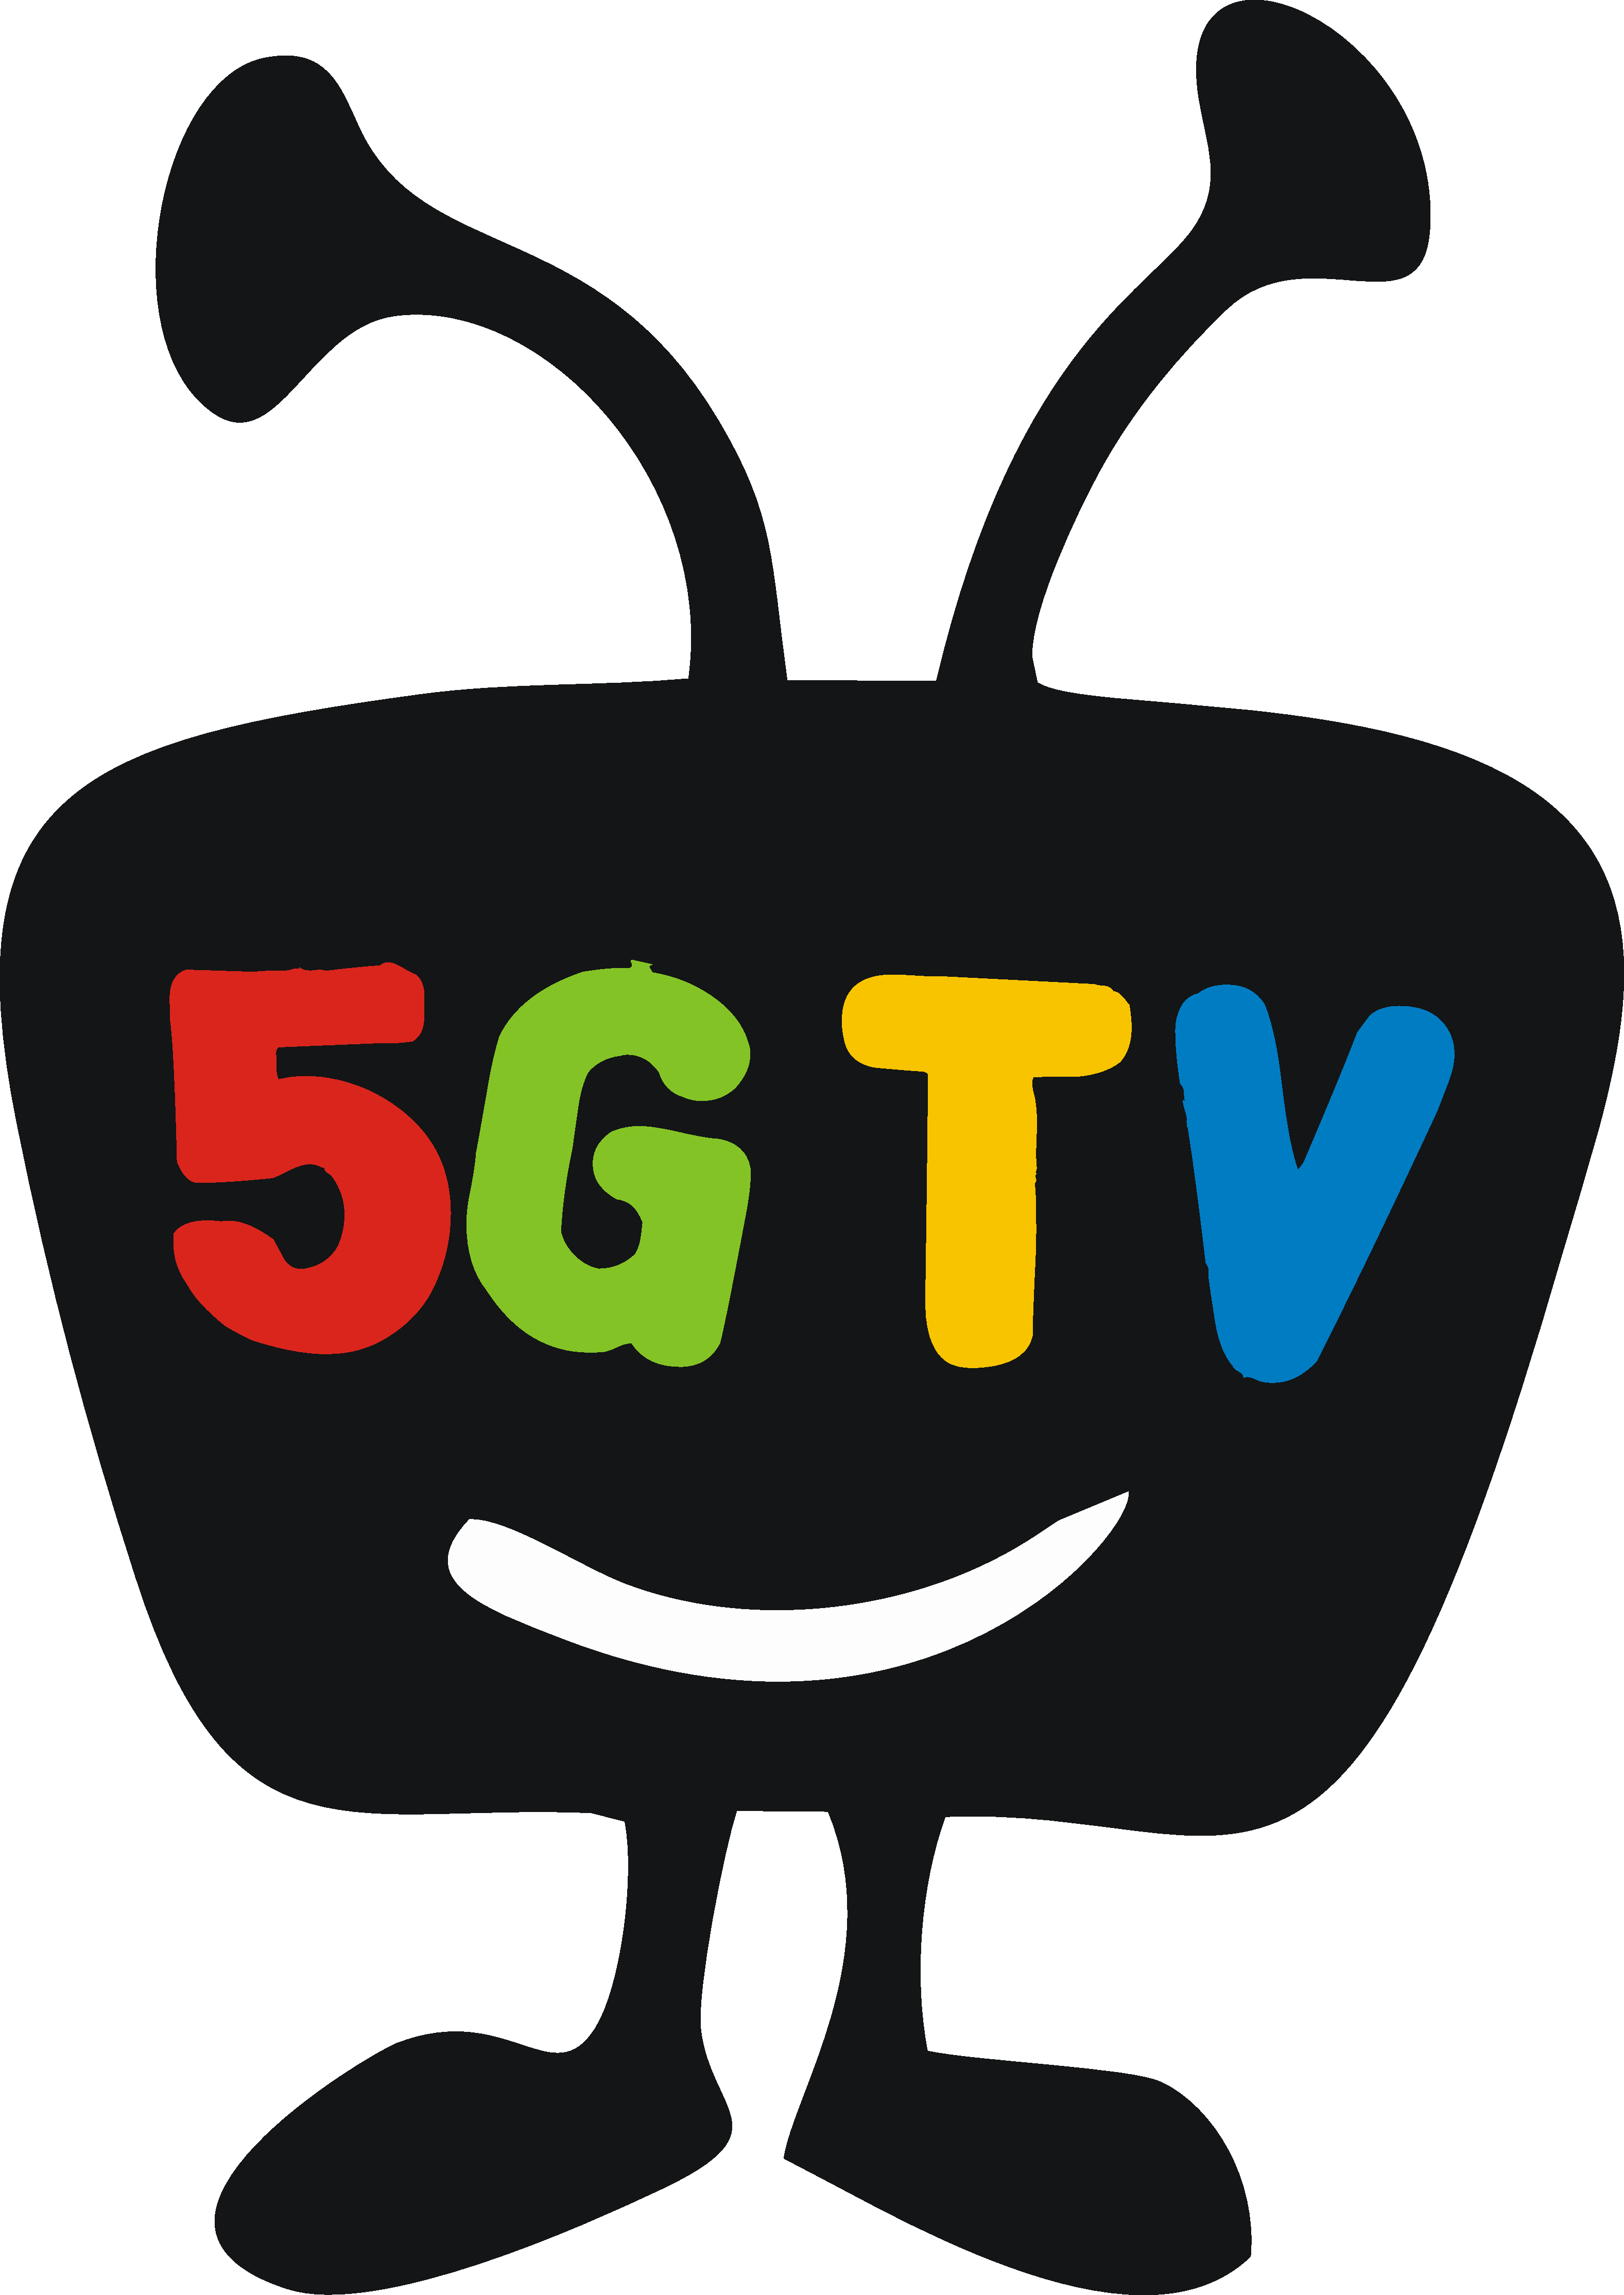 5G TV